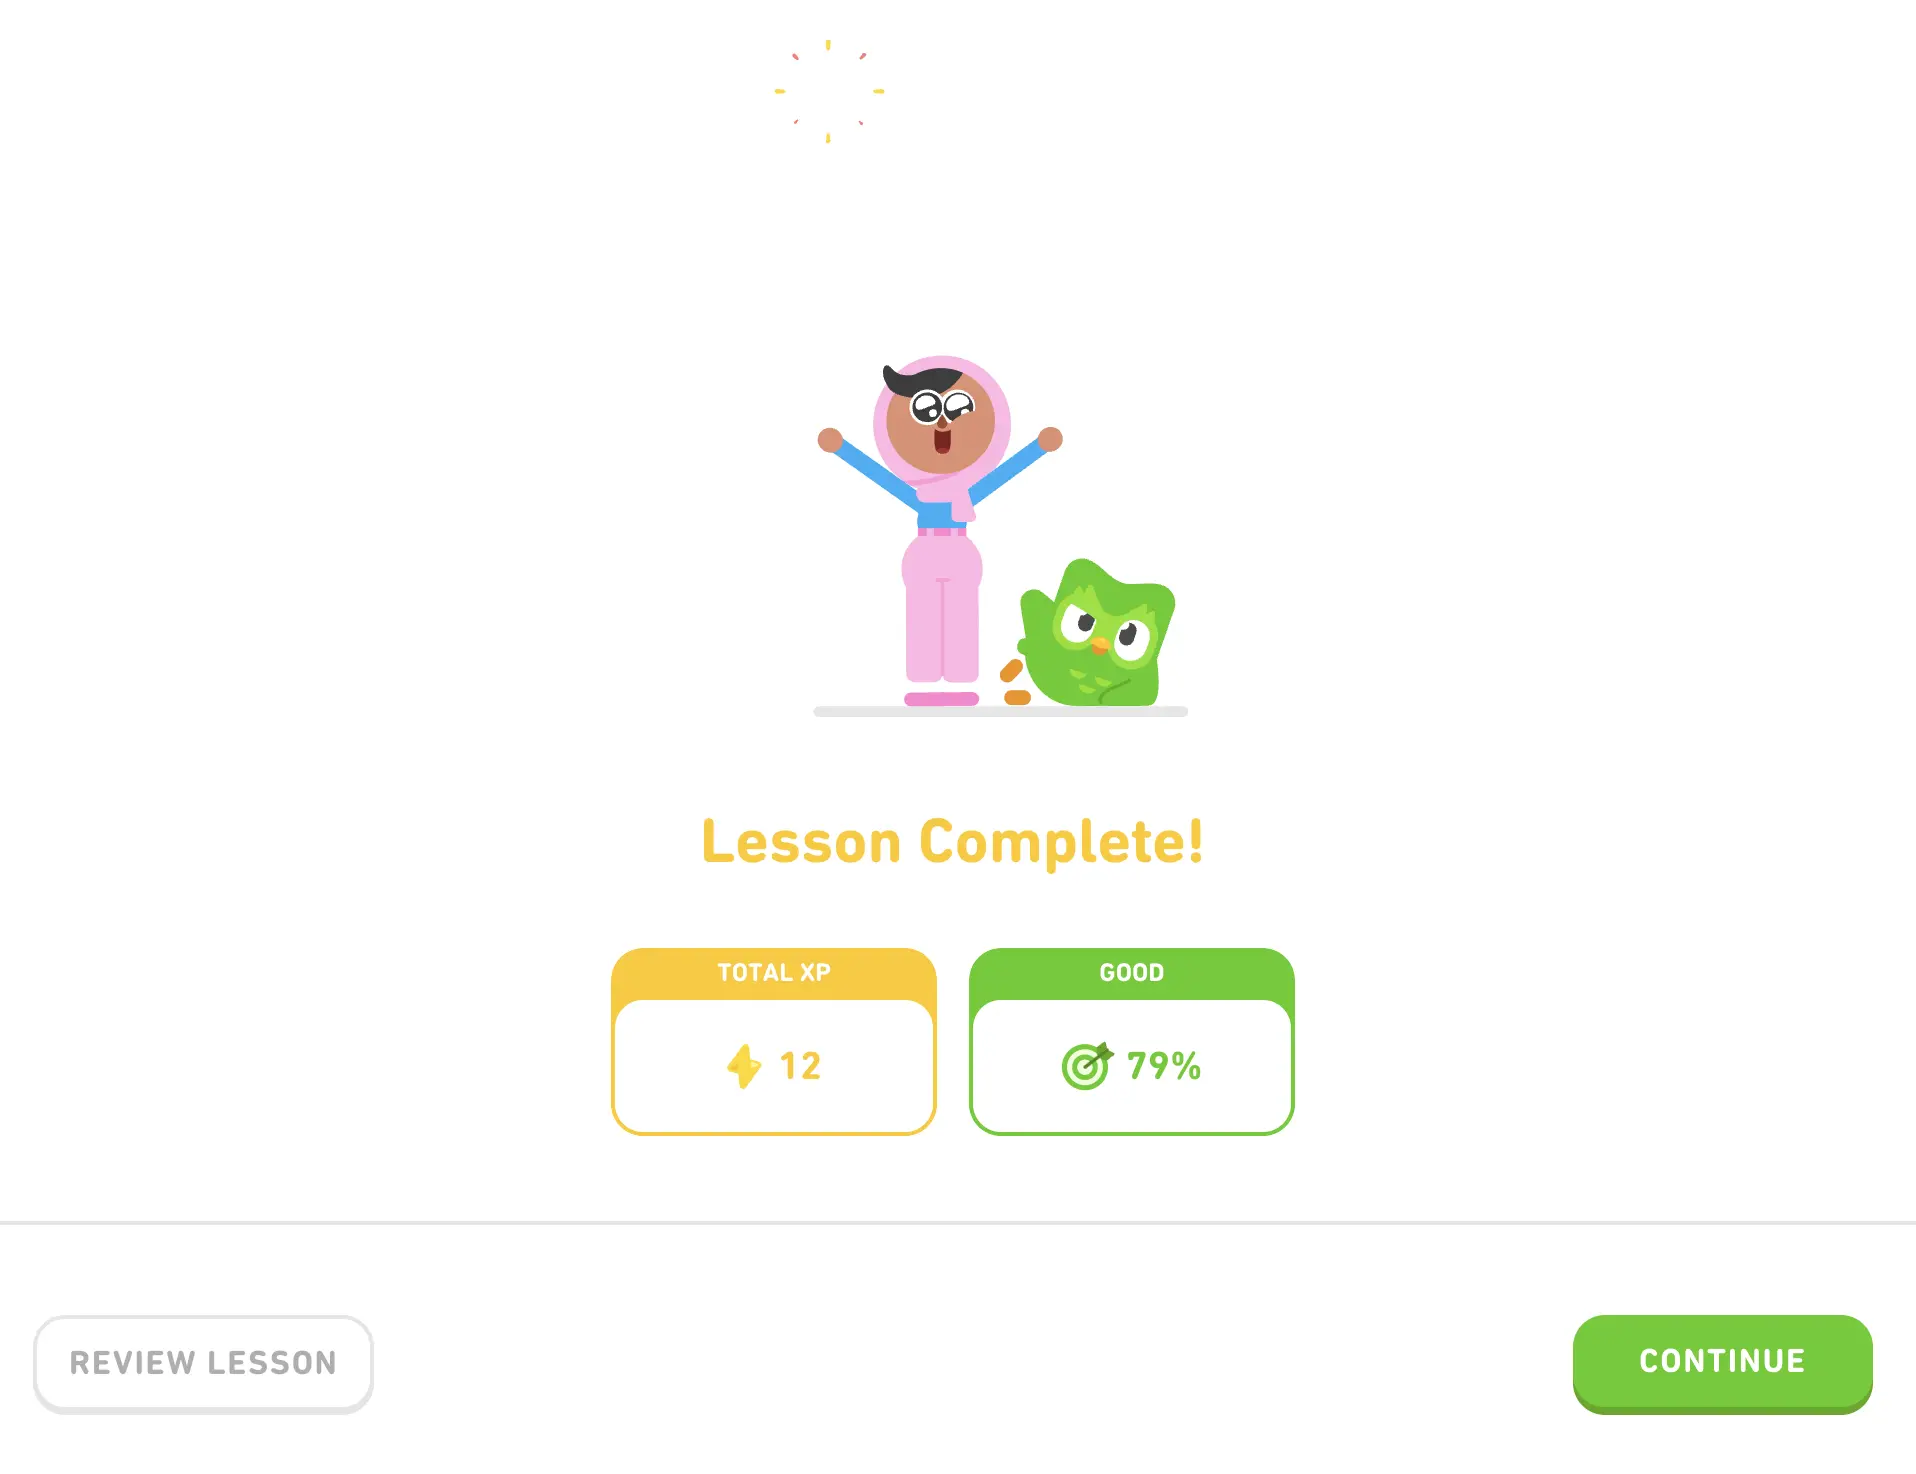 Duolingo case study